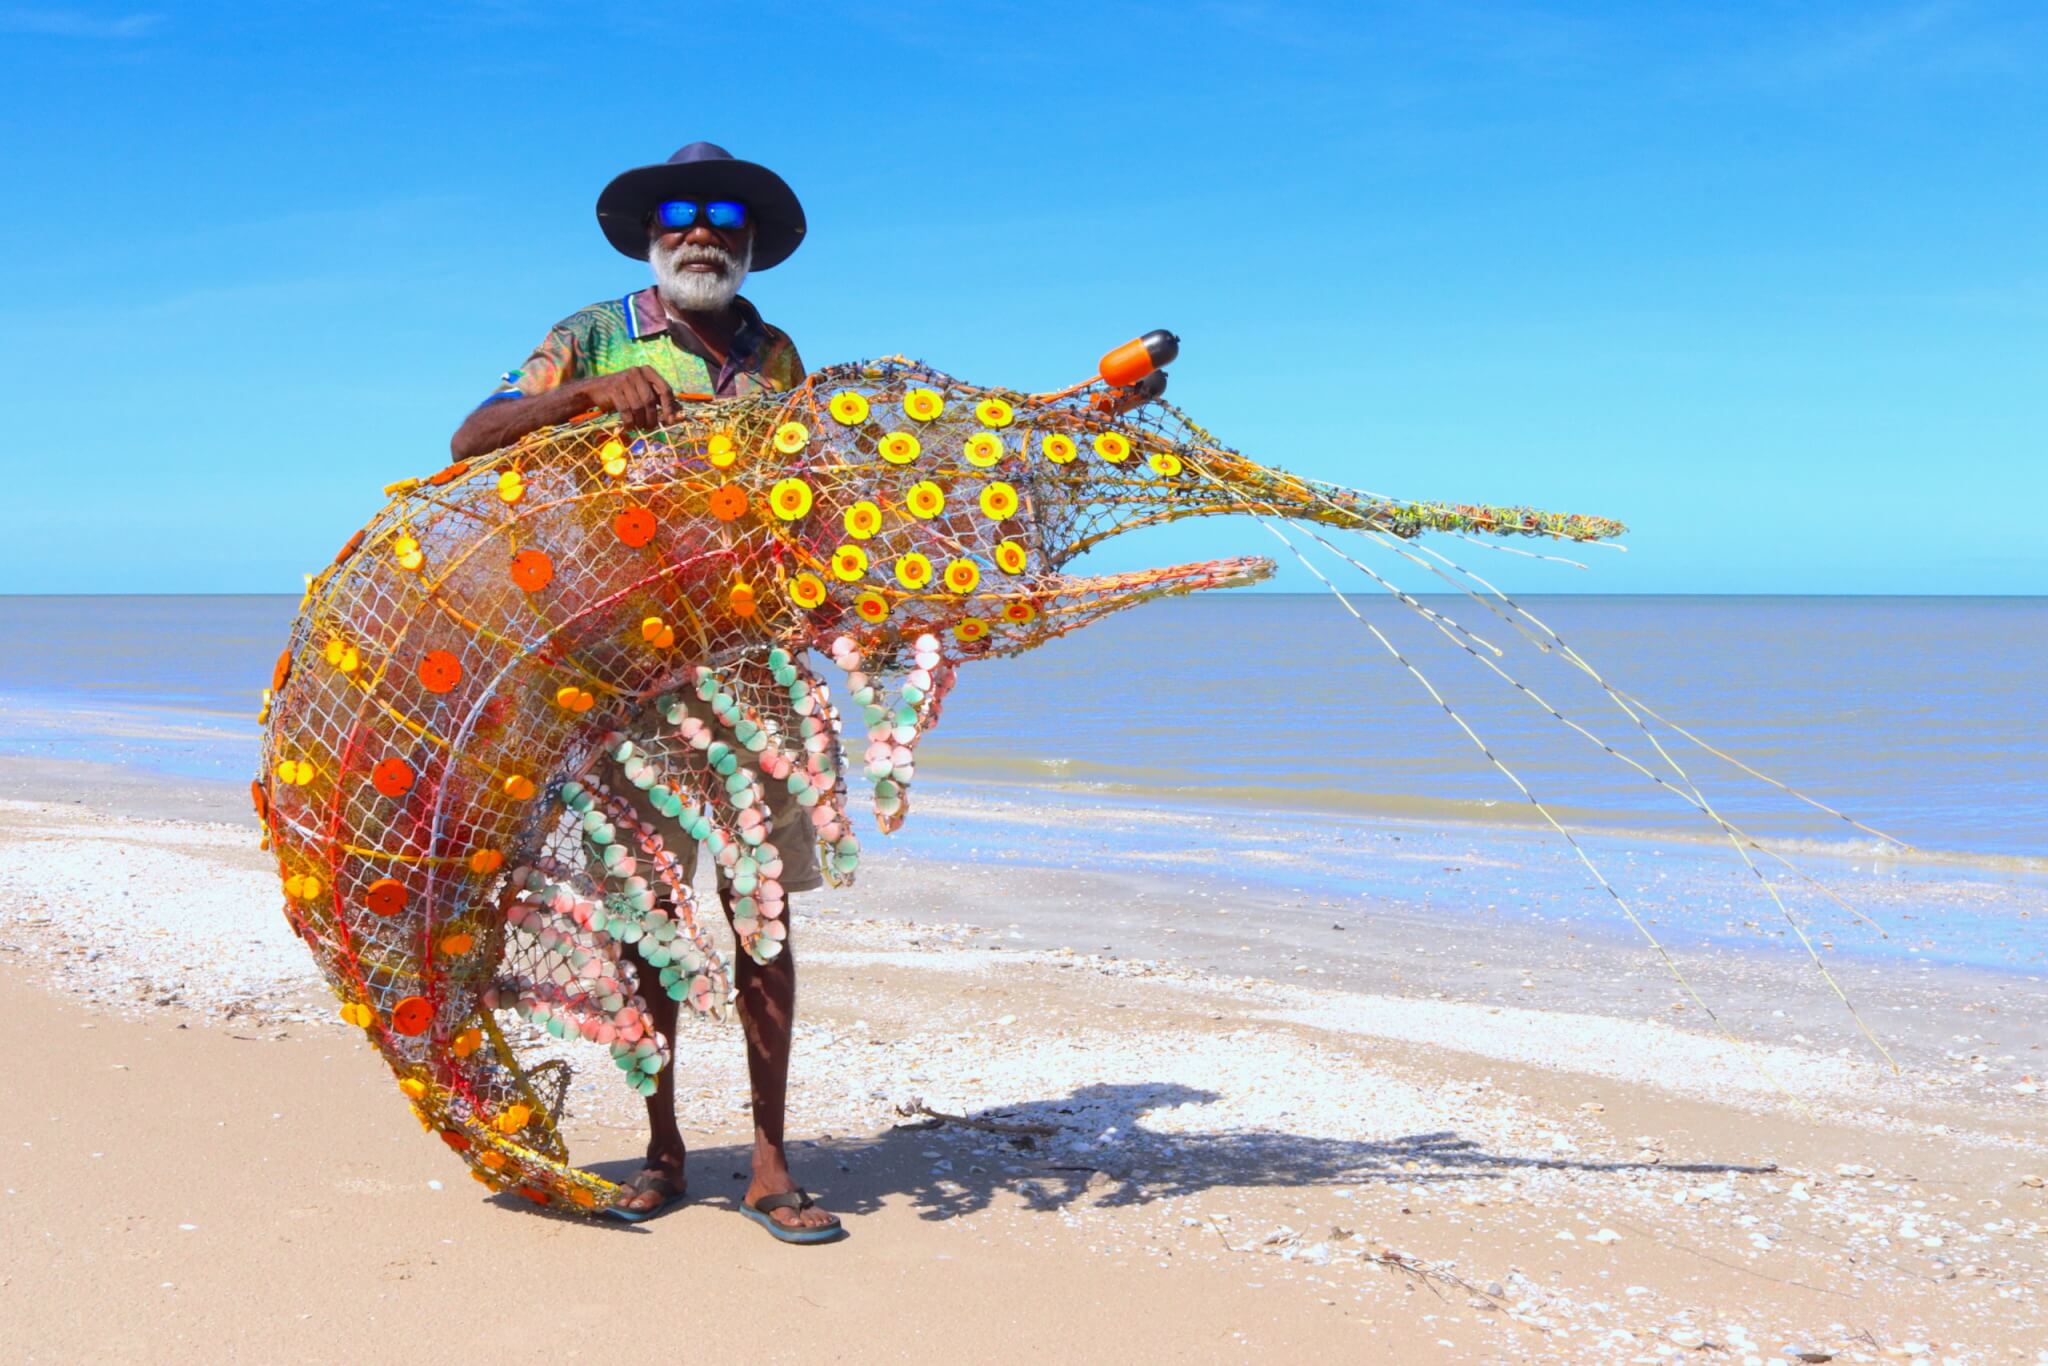 Pormpuraaw artist on a beach holding a prawn sculpture made from ghost nets